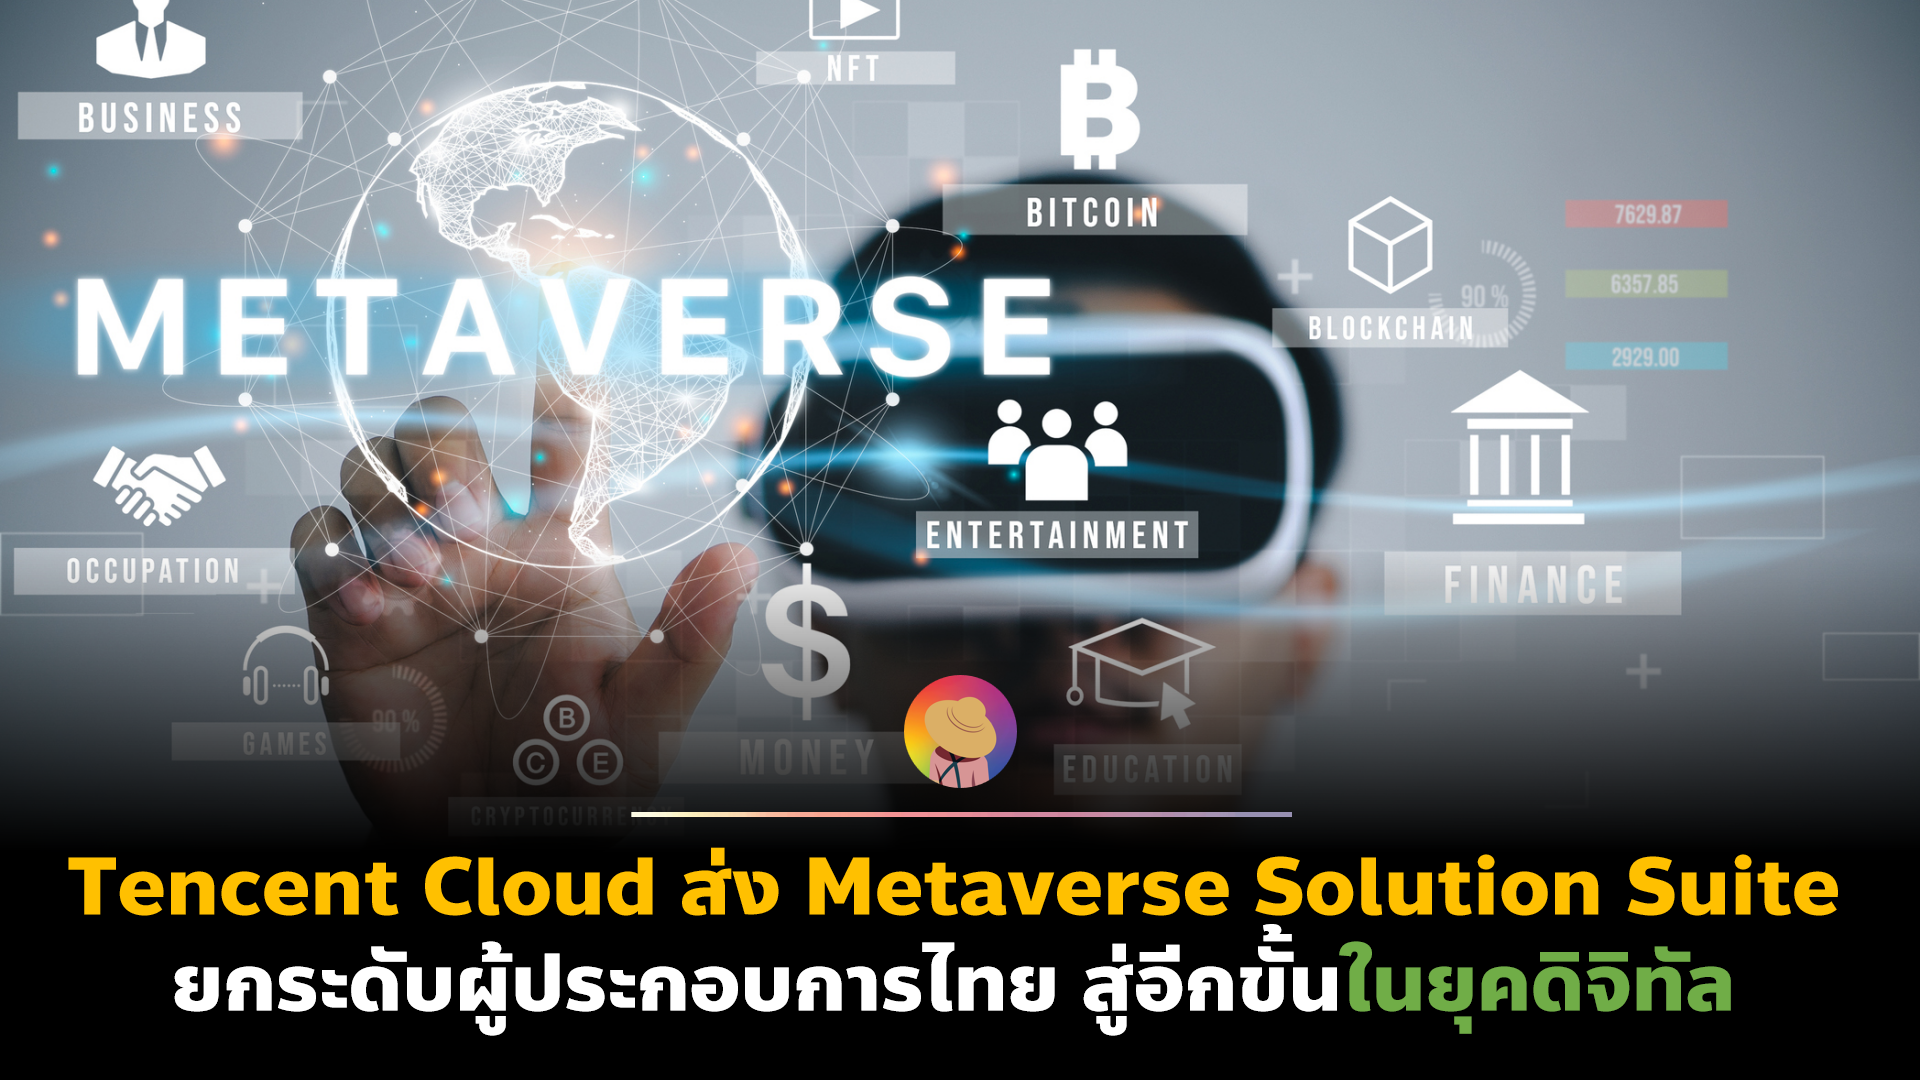 Tencent Cloud ส่ง Metaverse Solution Suite ยกระดับผู้ประกอบการไทย สู่อีกขั้นในยุคดิจิทัล